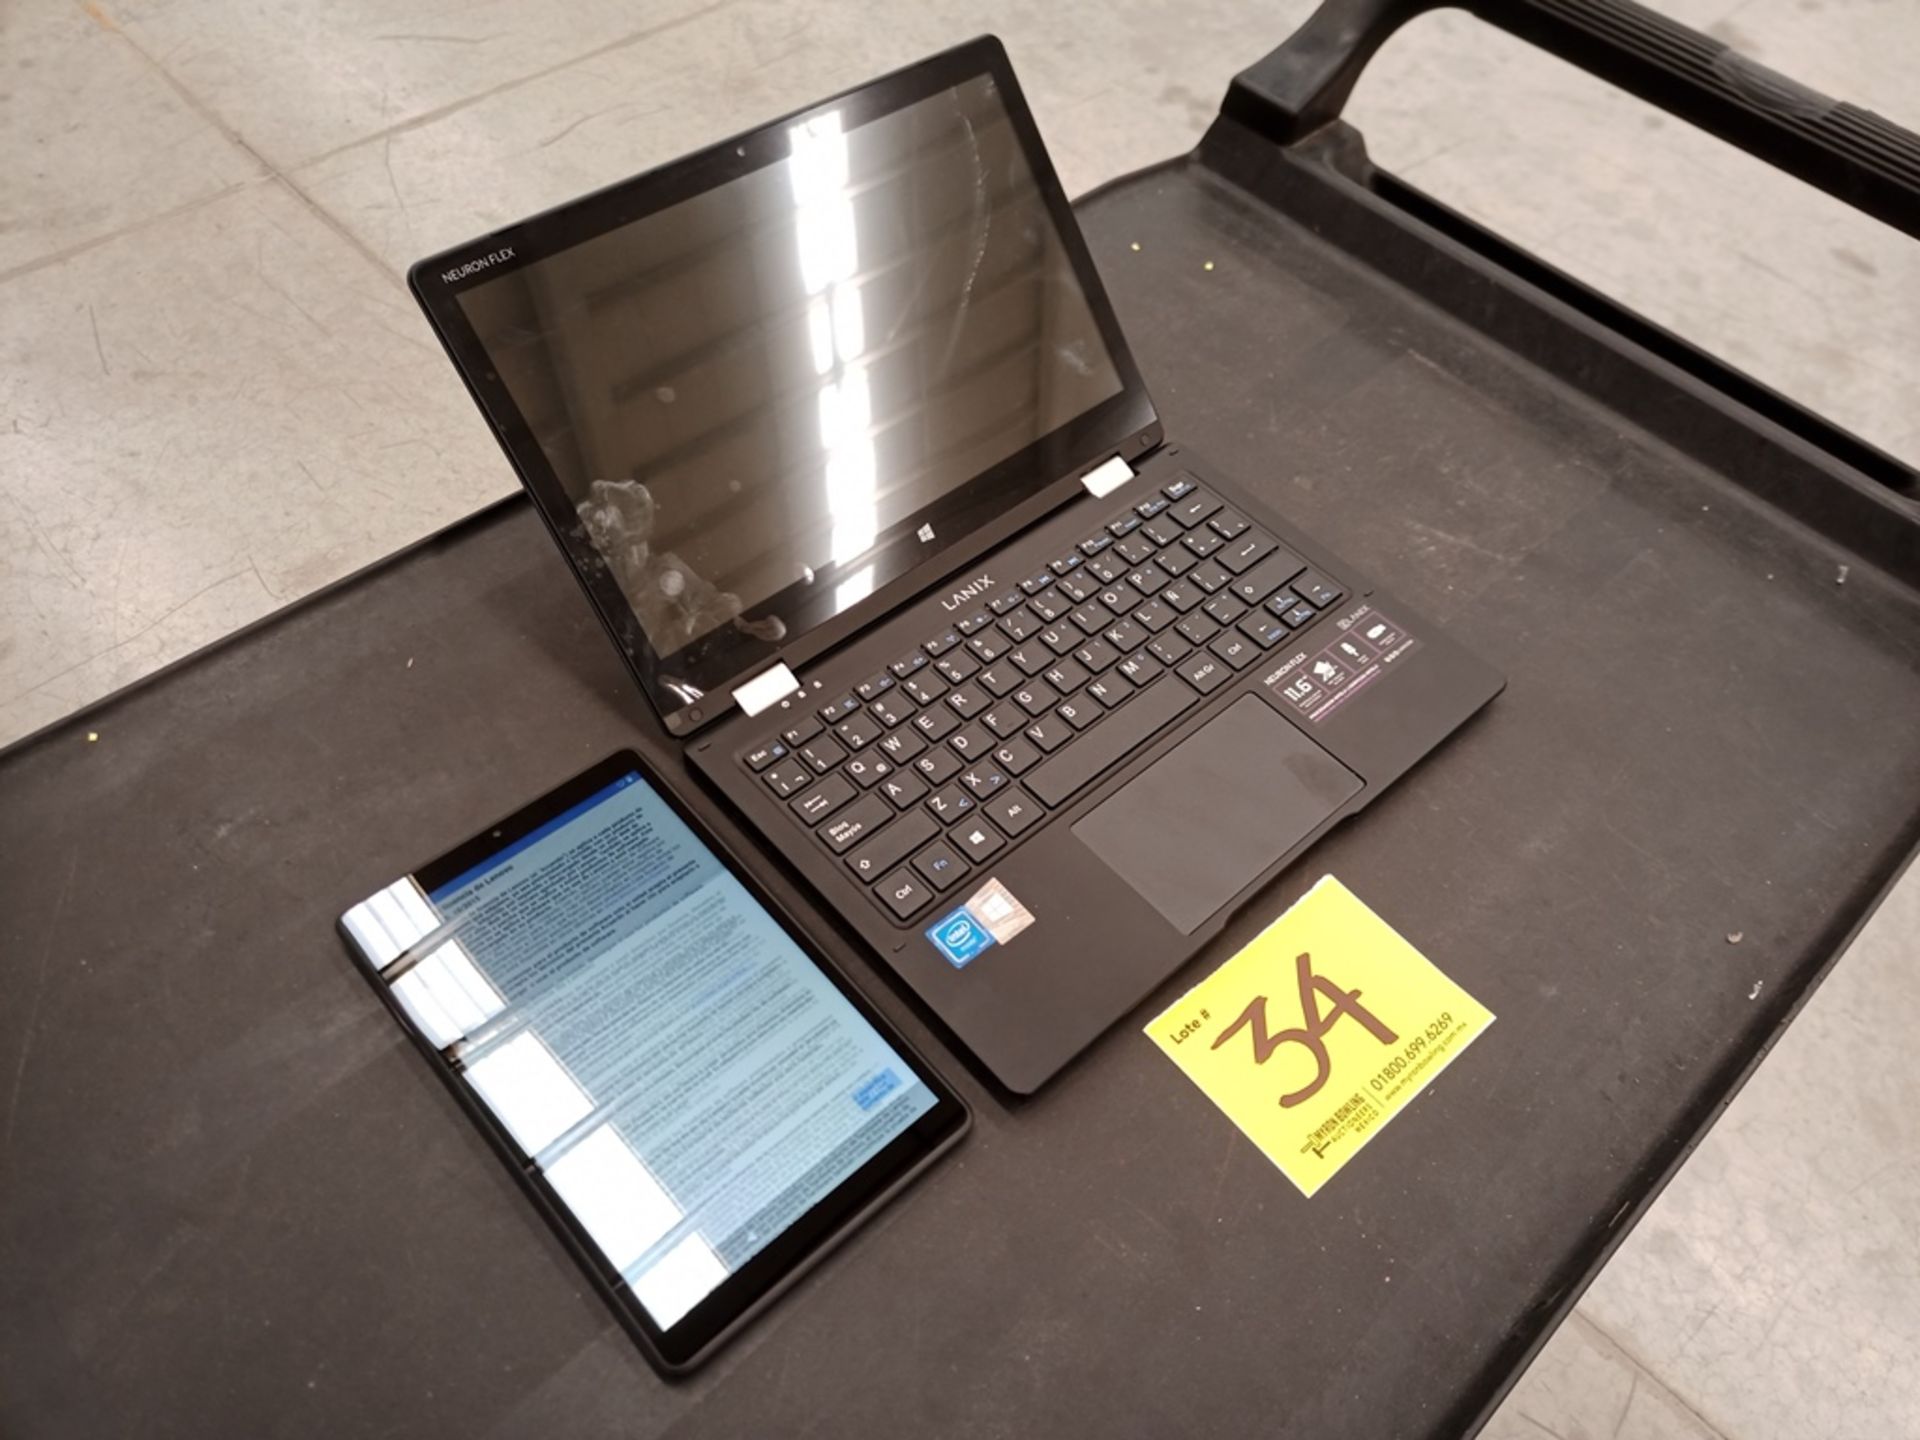 Lote de Computadora + Tablet contiene: 1 Computadora tipo mini Laptop marca Lanix, Modelo NeuronFle - Image 5 of 9